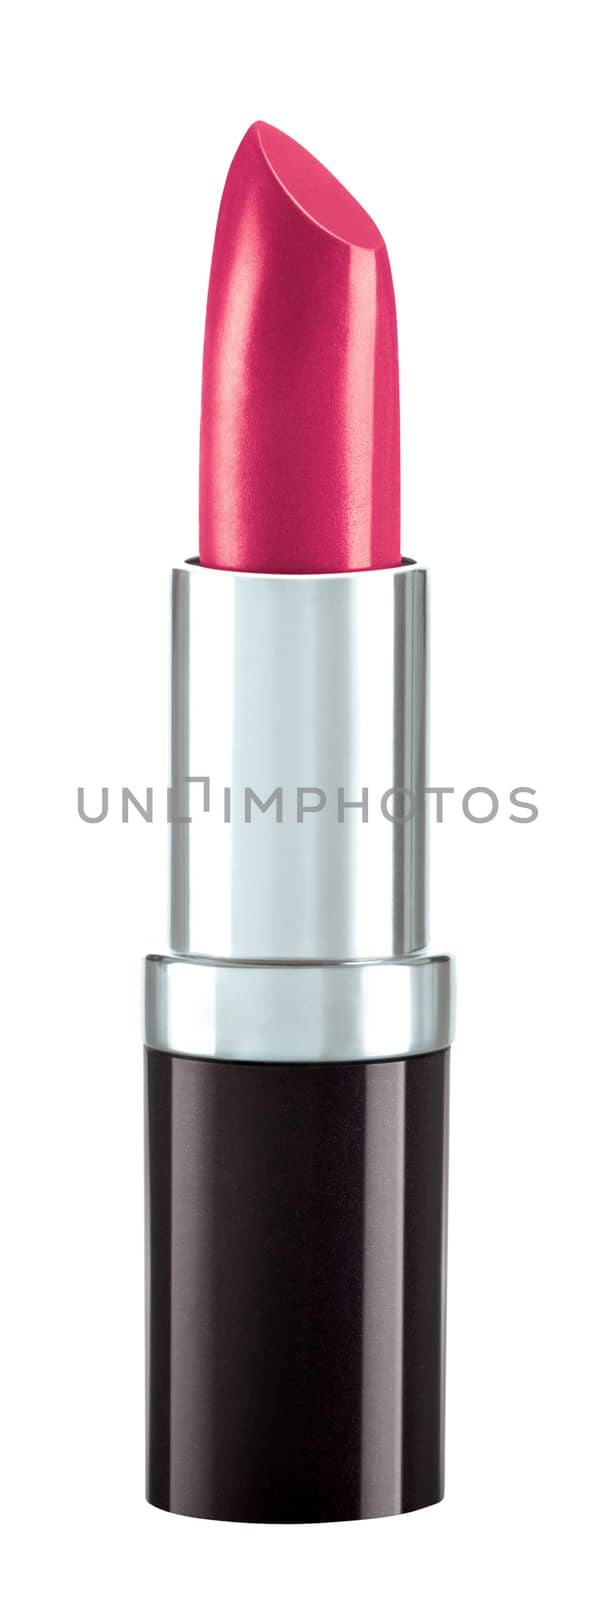 Red lipstick by ozaiachin